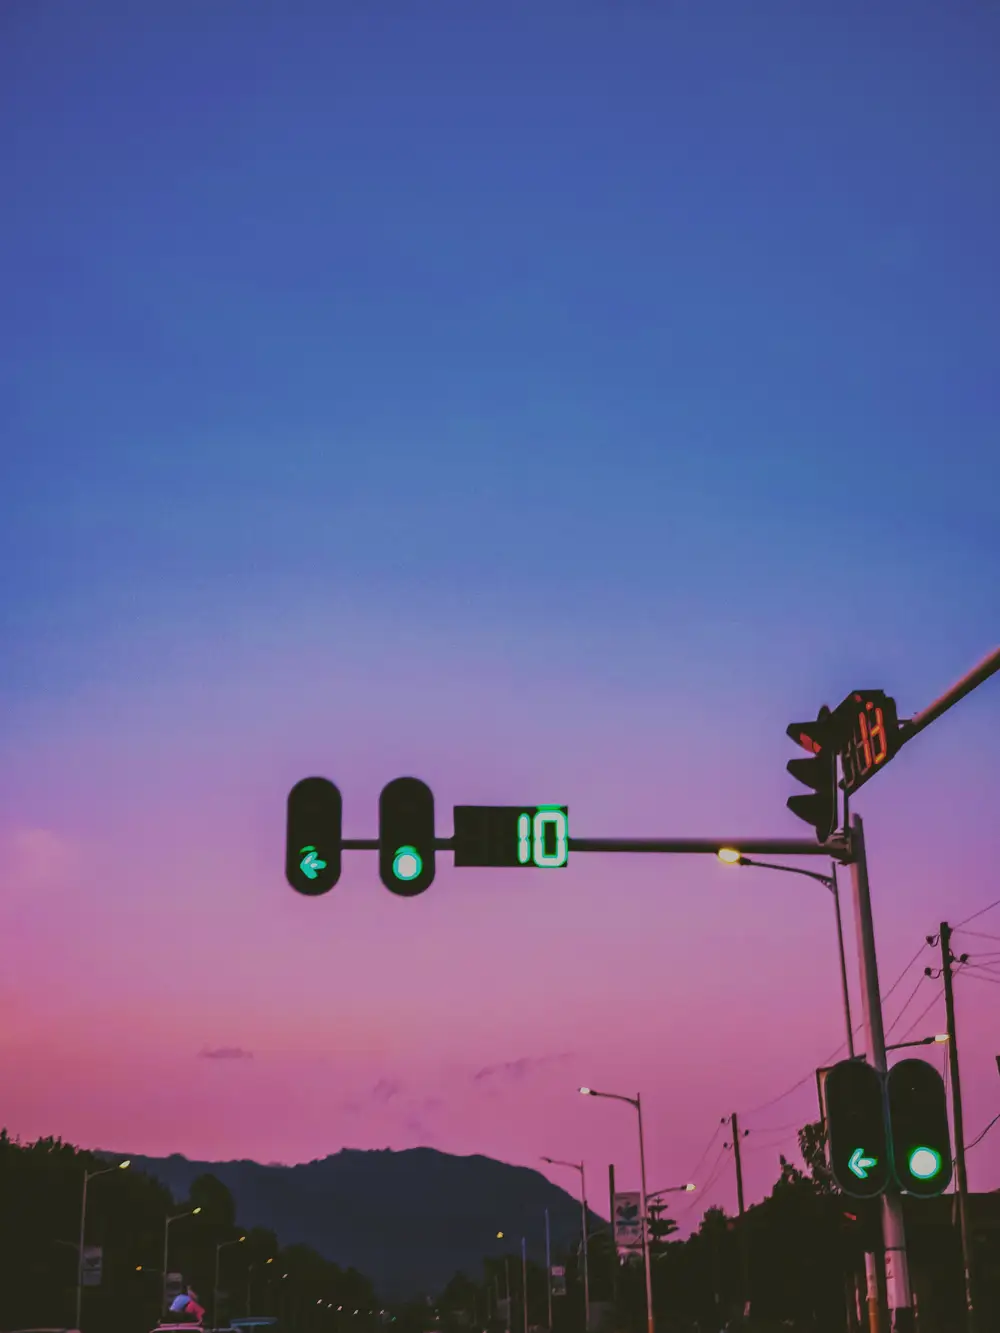 the street light says green